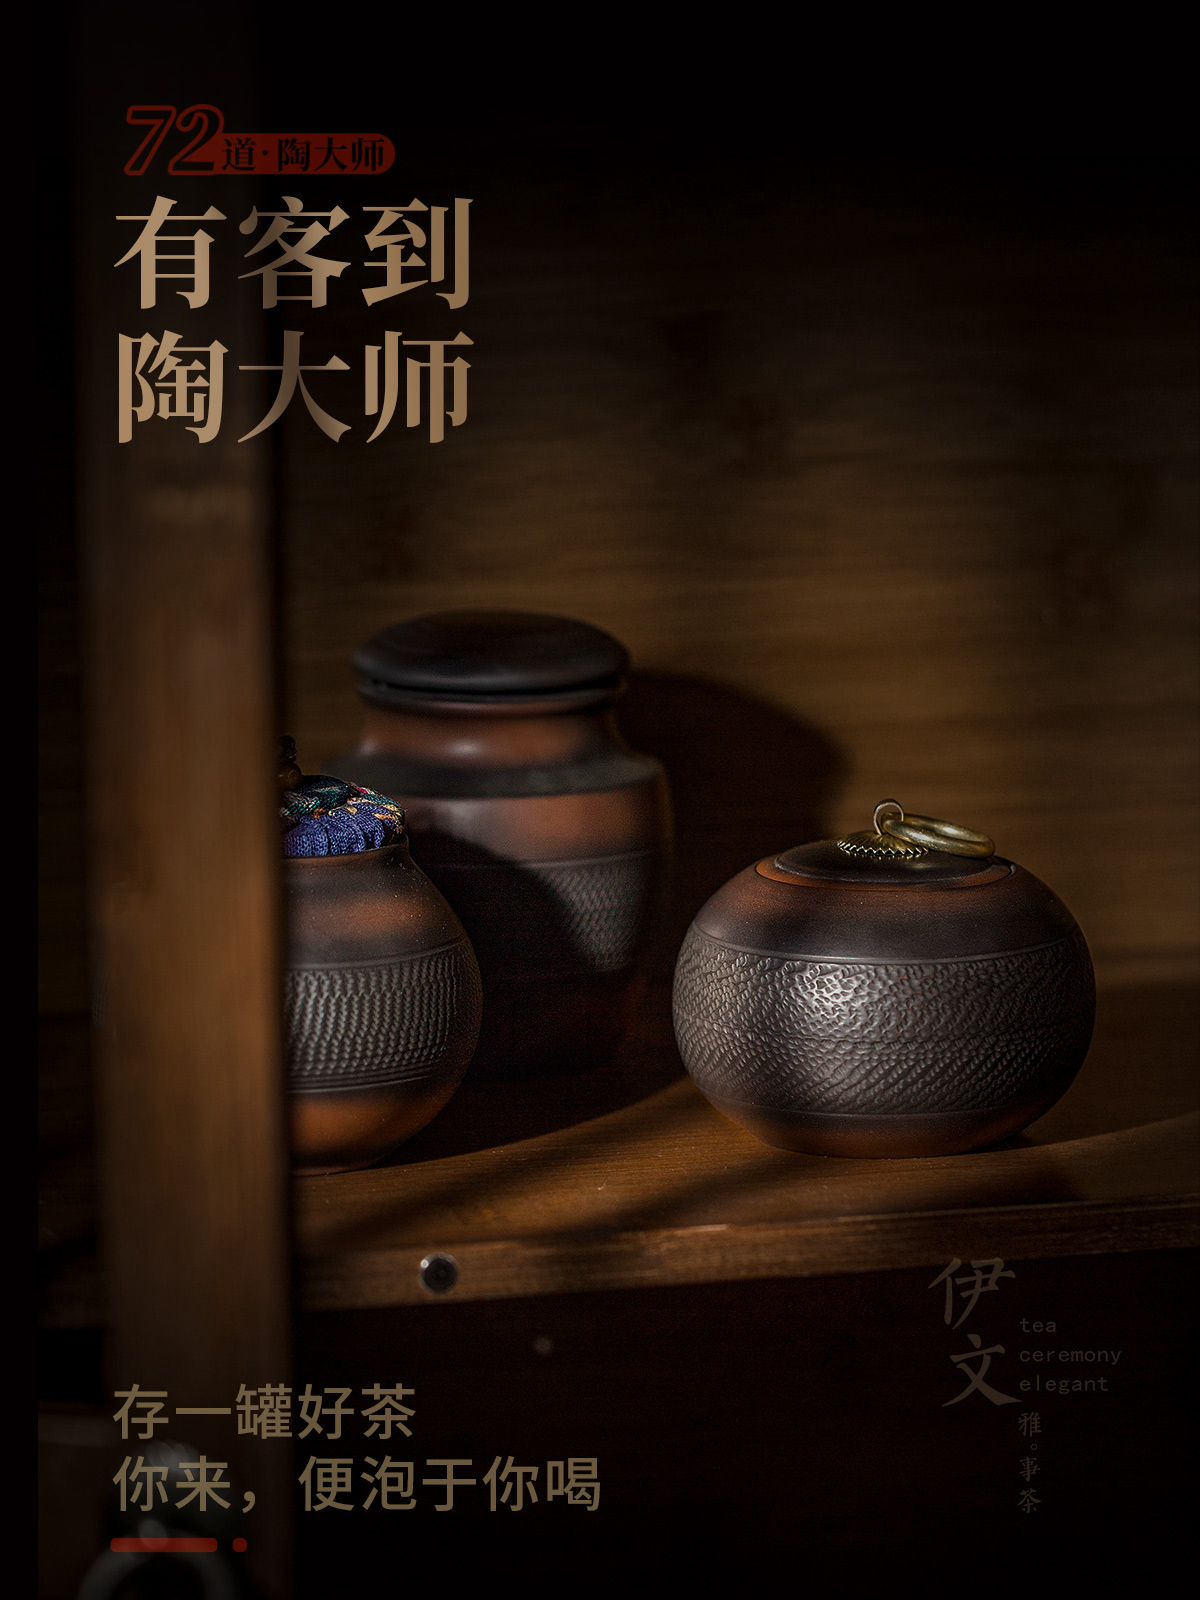 Even Japanese caddy fixings contracted ceramic seal pot home tea POTS creative tea storage box